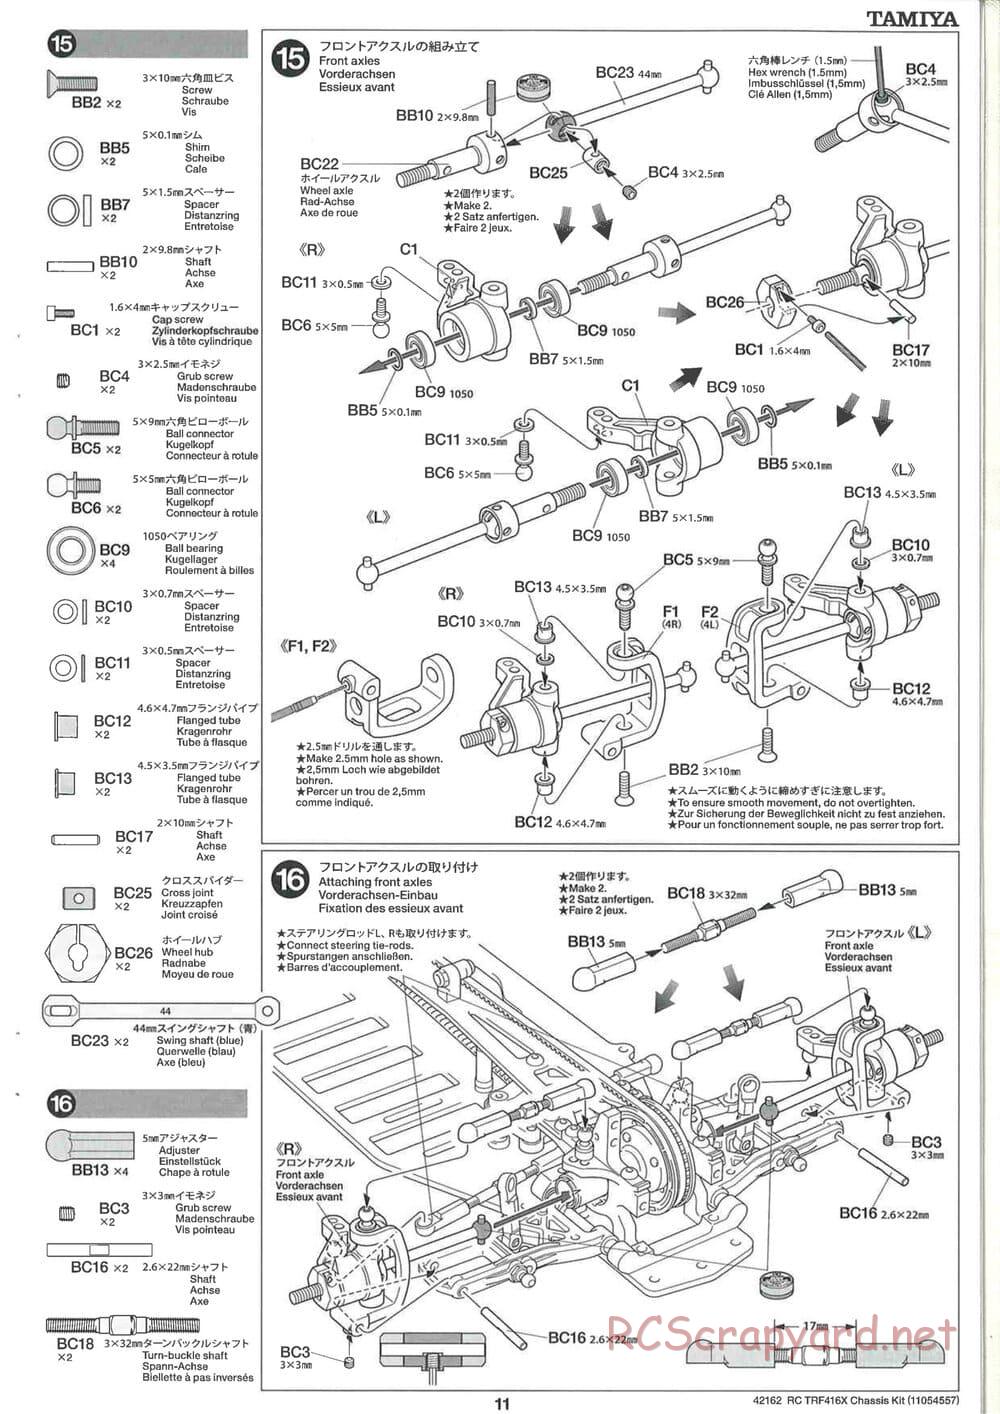 Tamiya - TRF416X Chassis - Manual - Page 11